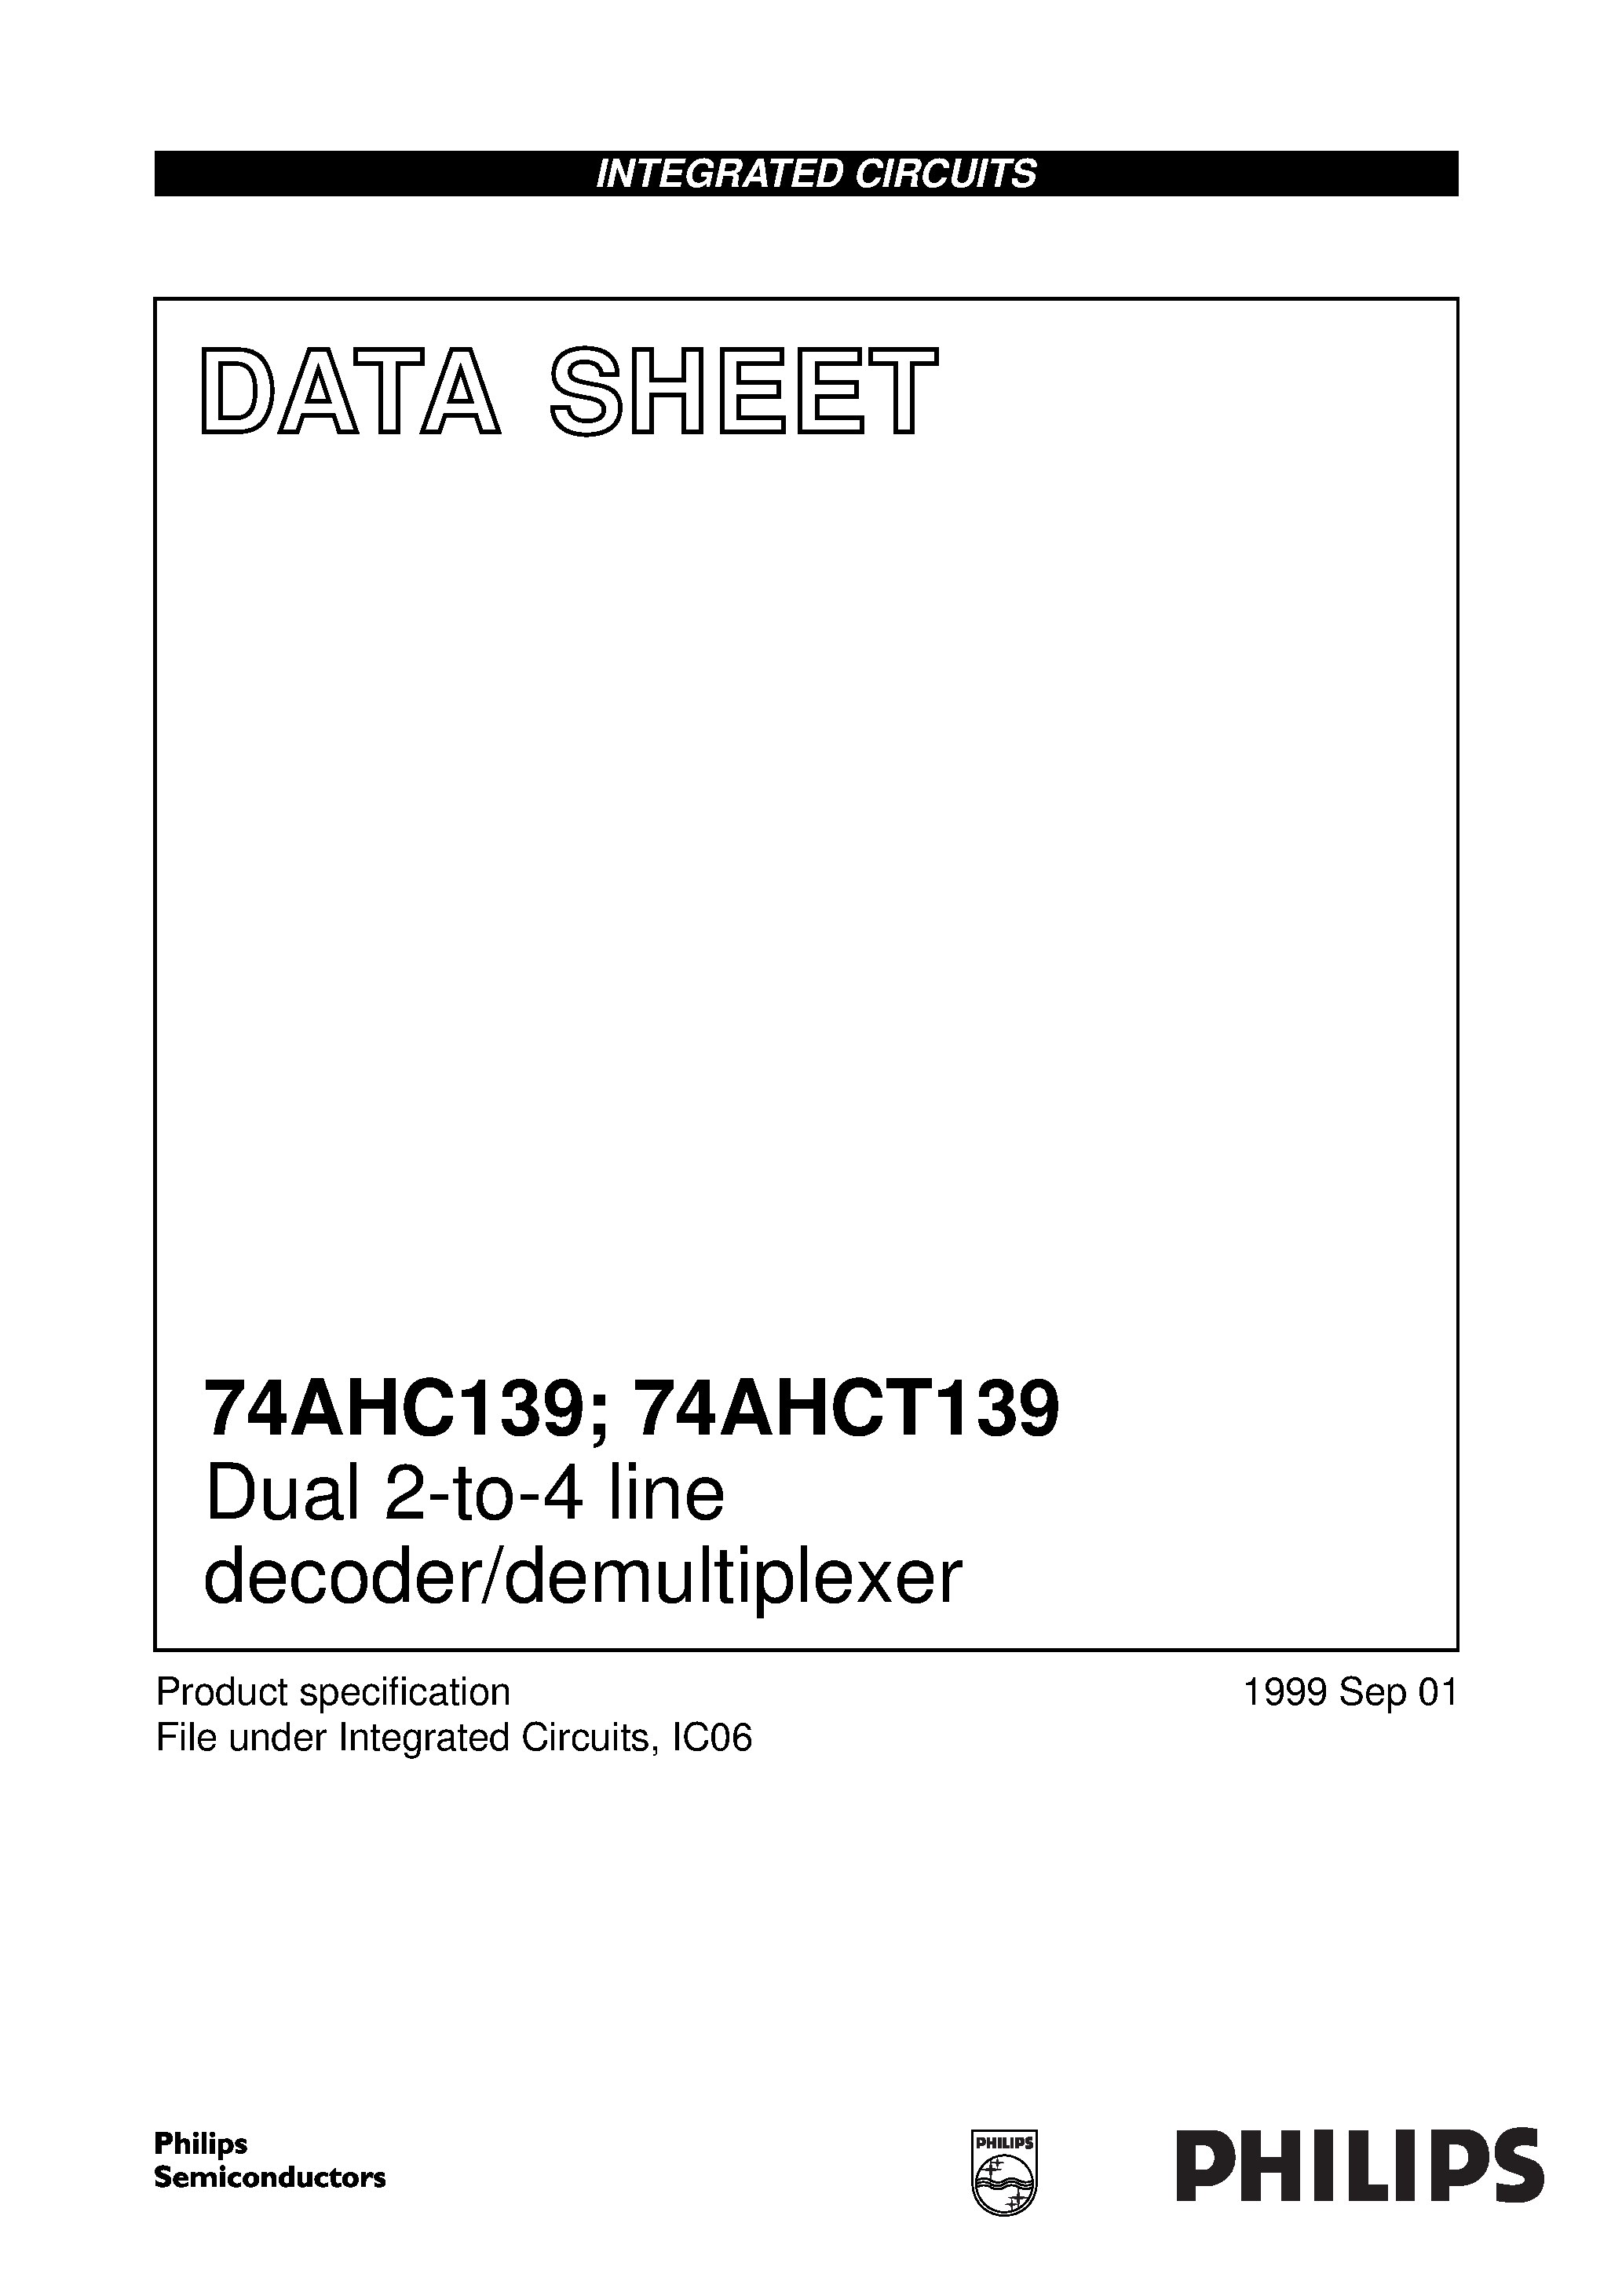 Datasheet 74AHC139PWDH - Dual 2-to-4 line decoder/demultiplexer page 1